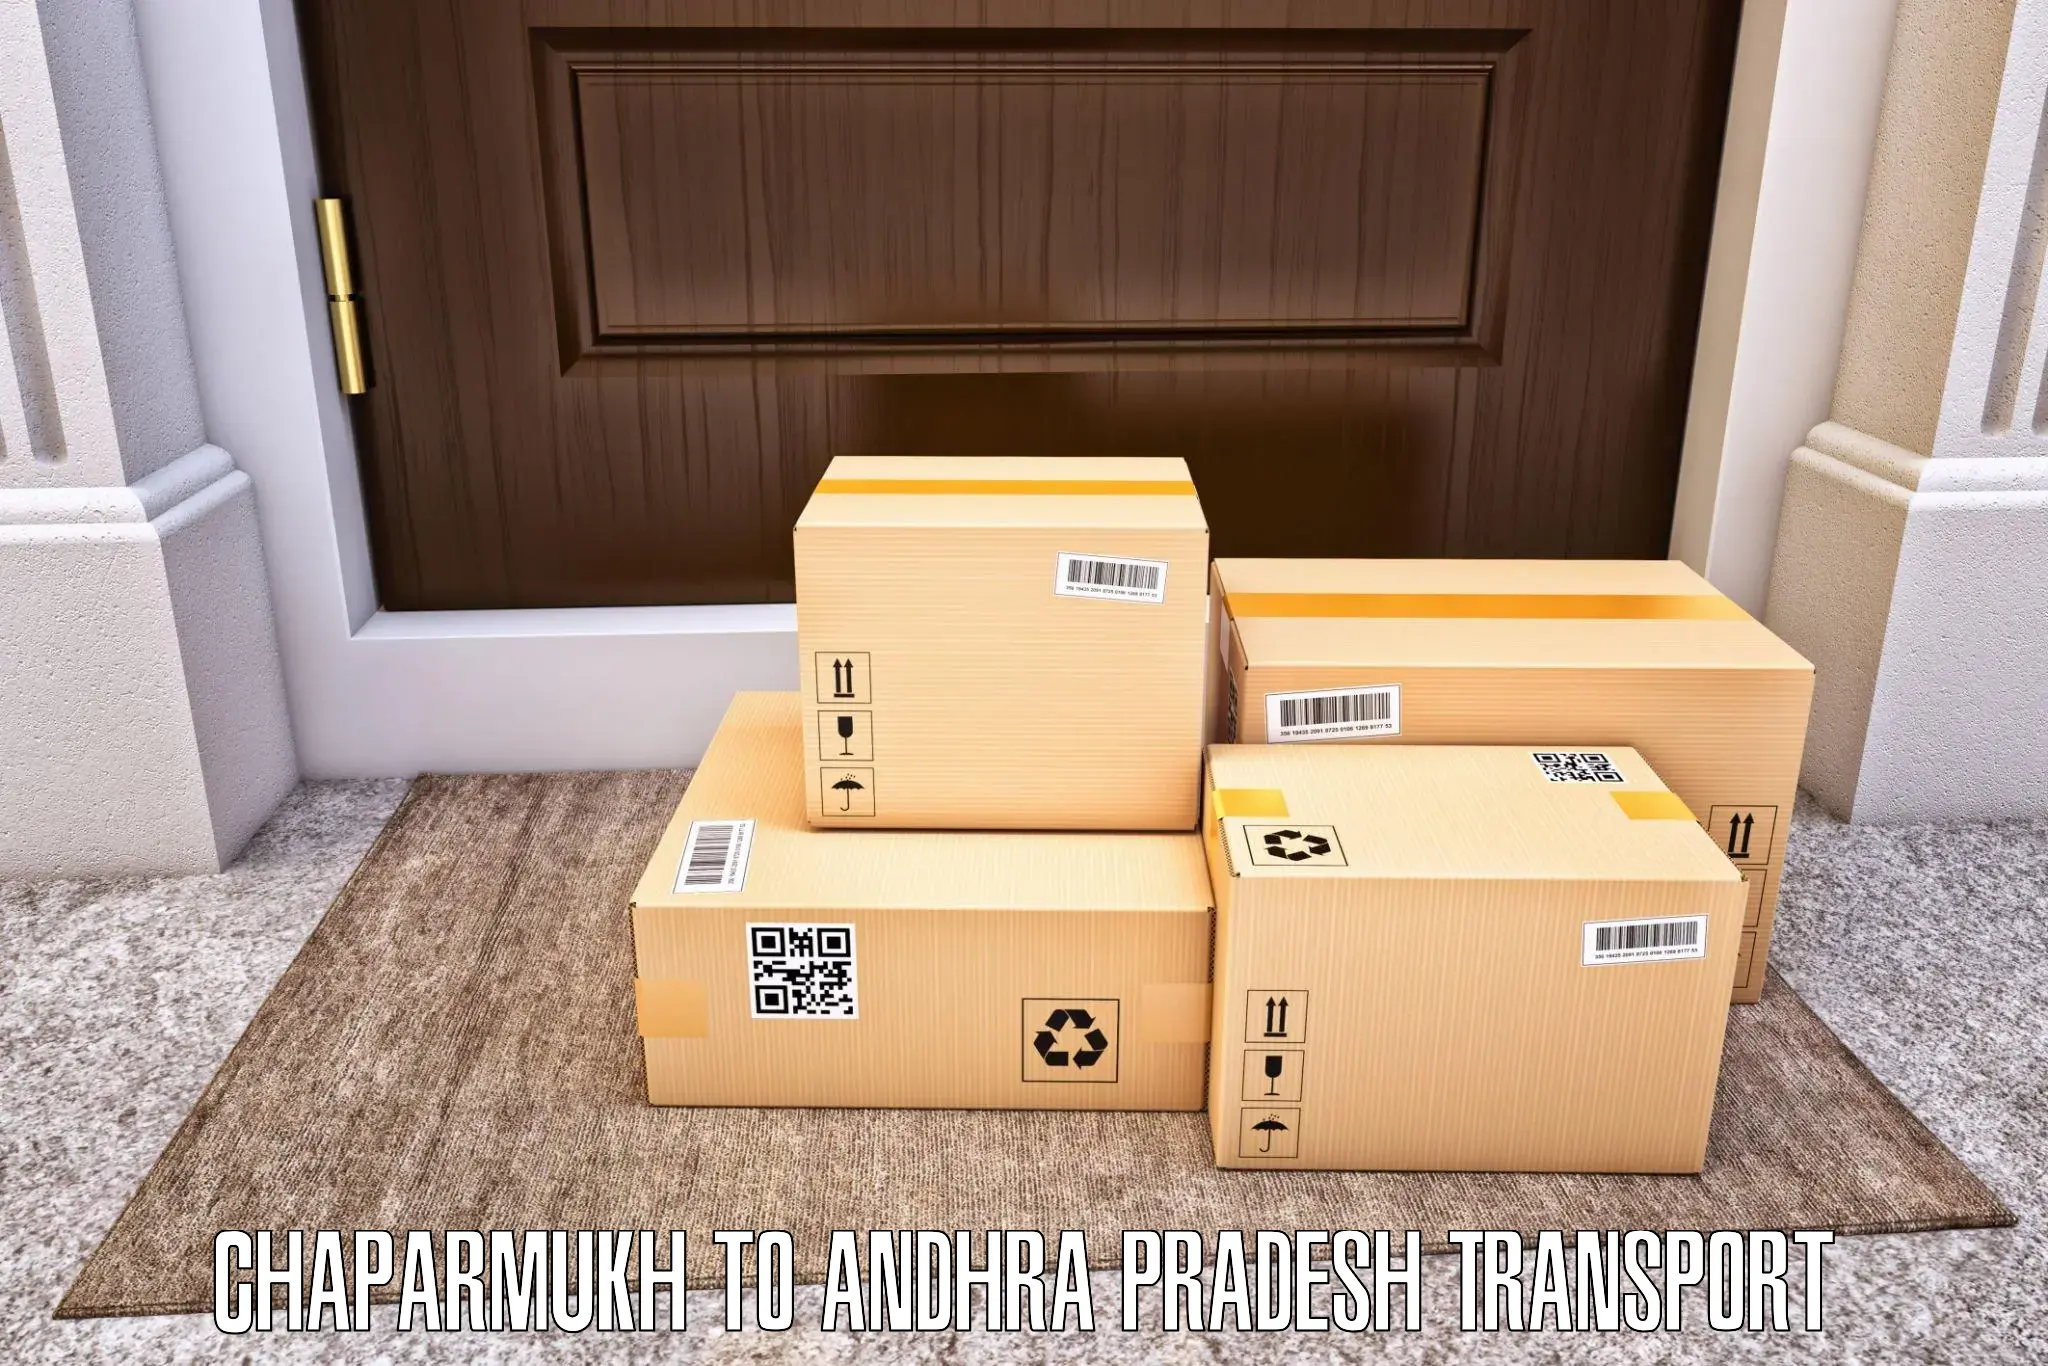 Delivery service Chaparmukh to Andhra Pradesh